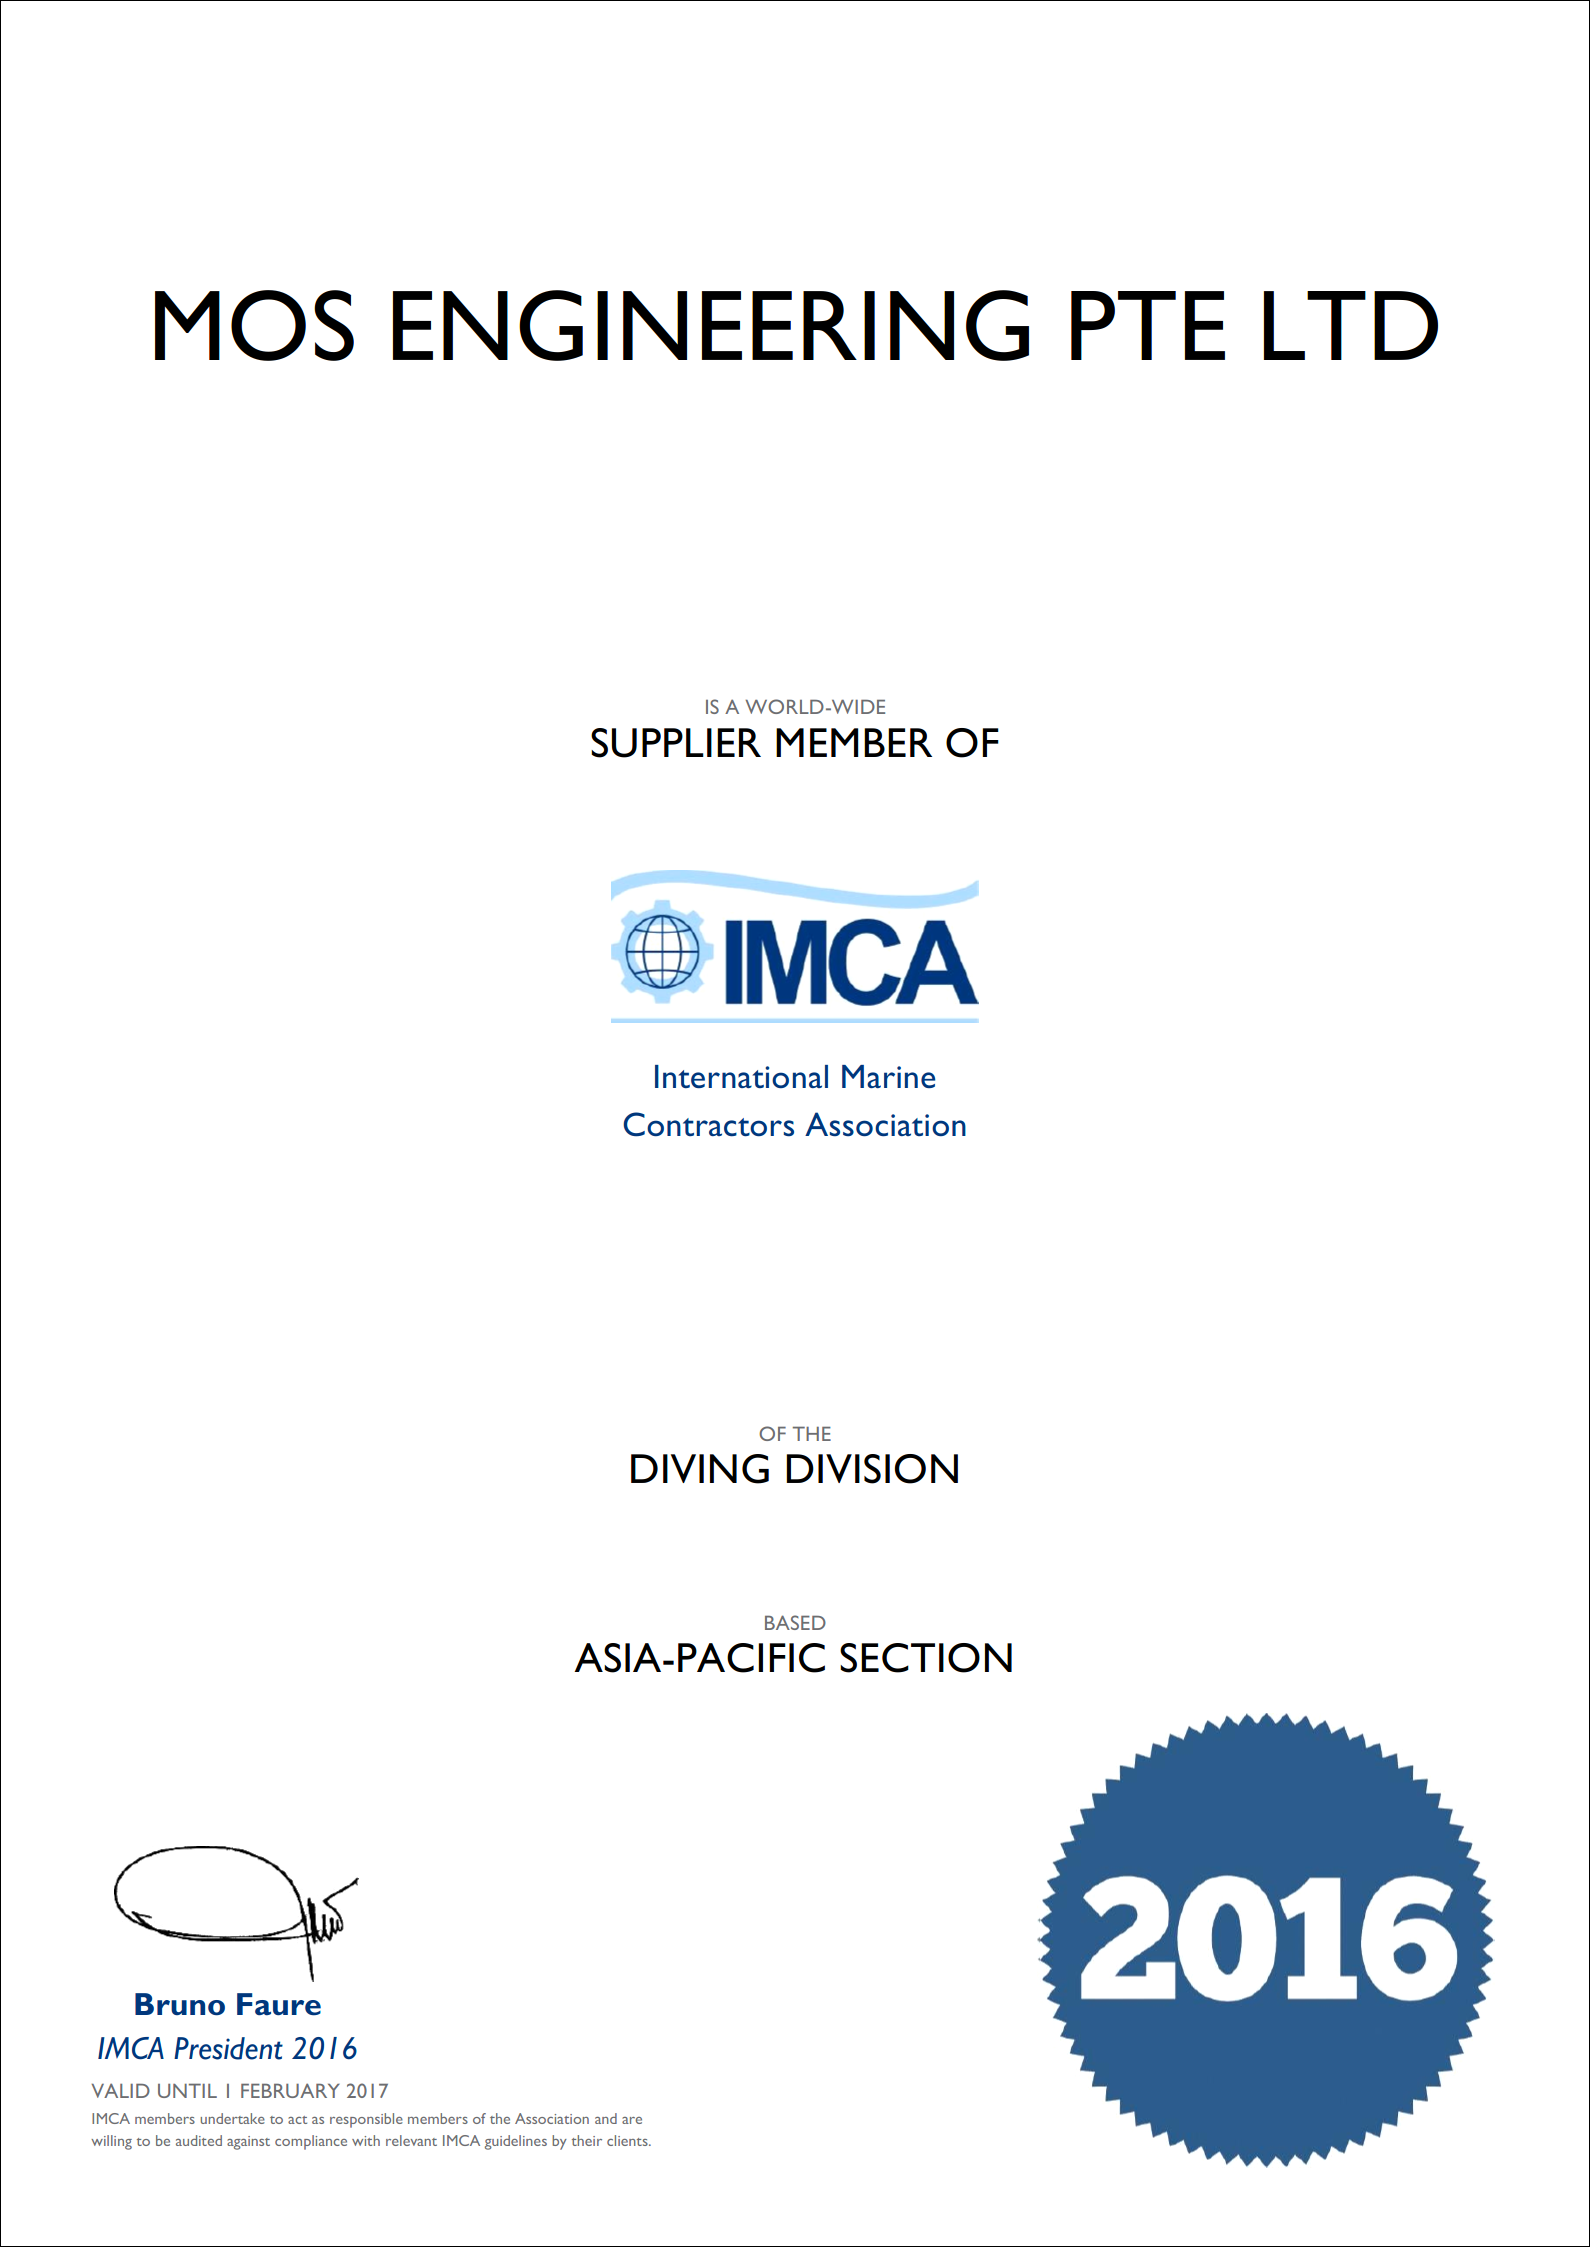 IMCA Certificate 2016 - MOS Engineering Pte Ltd.png